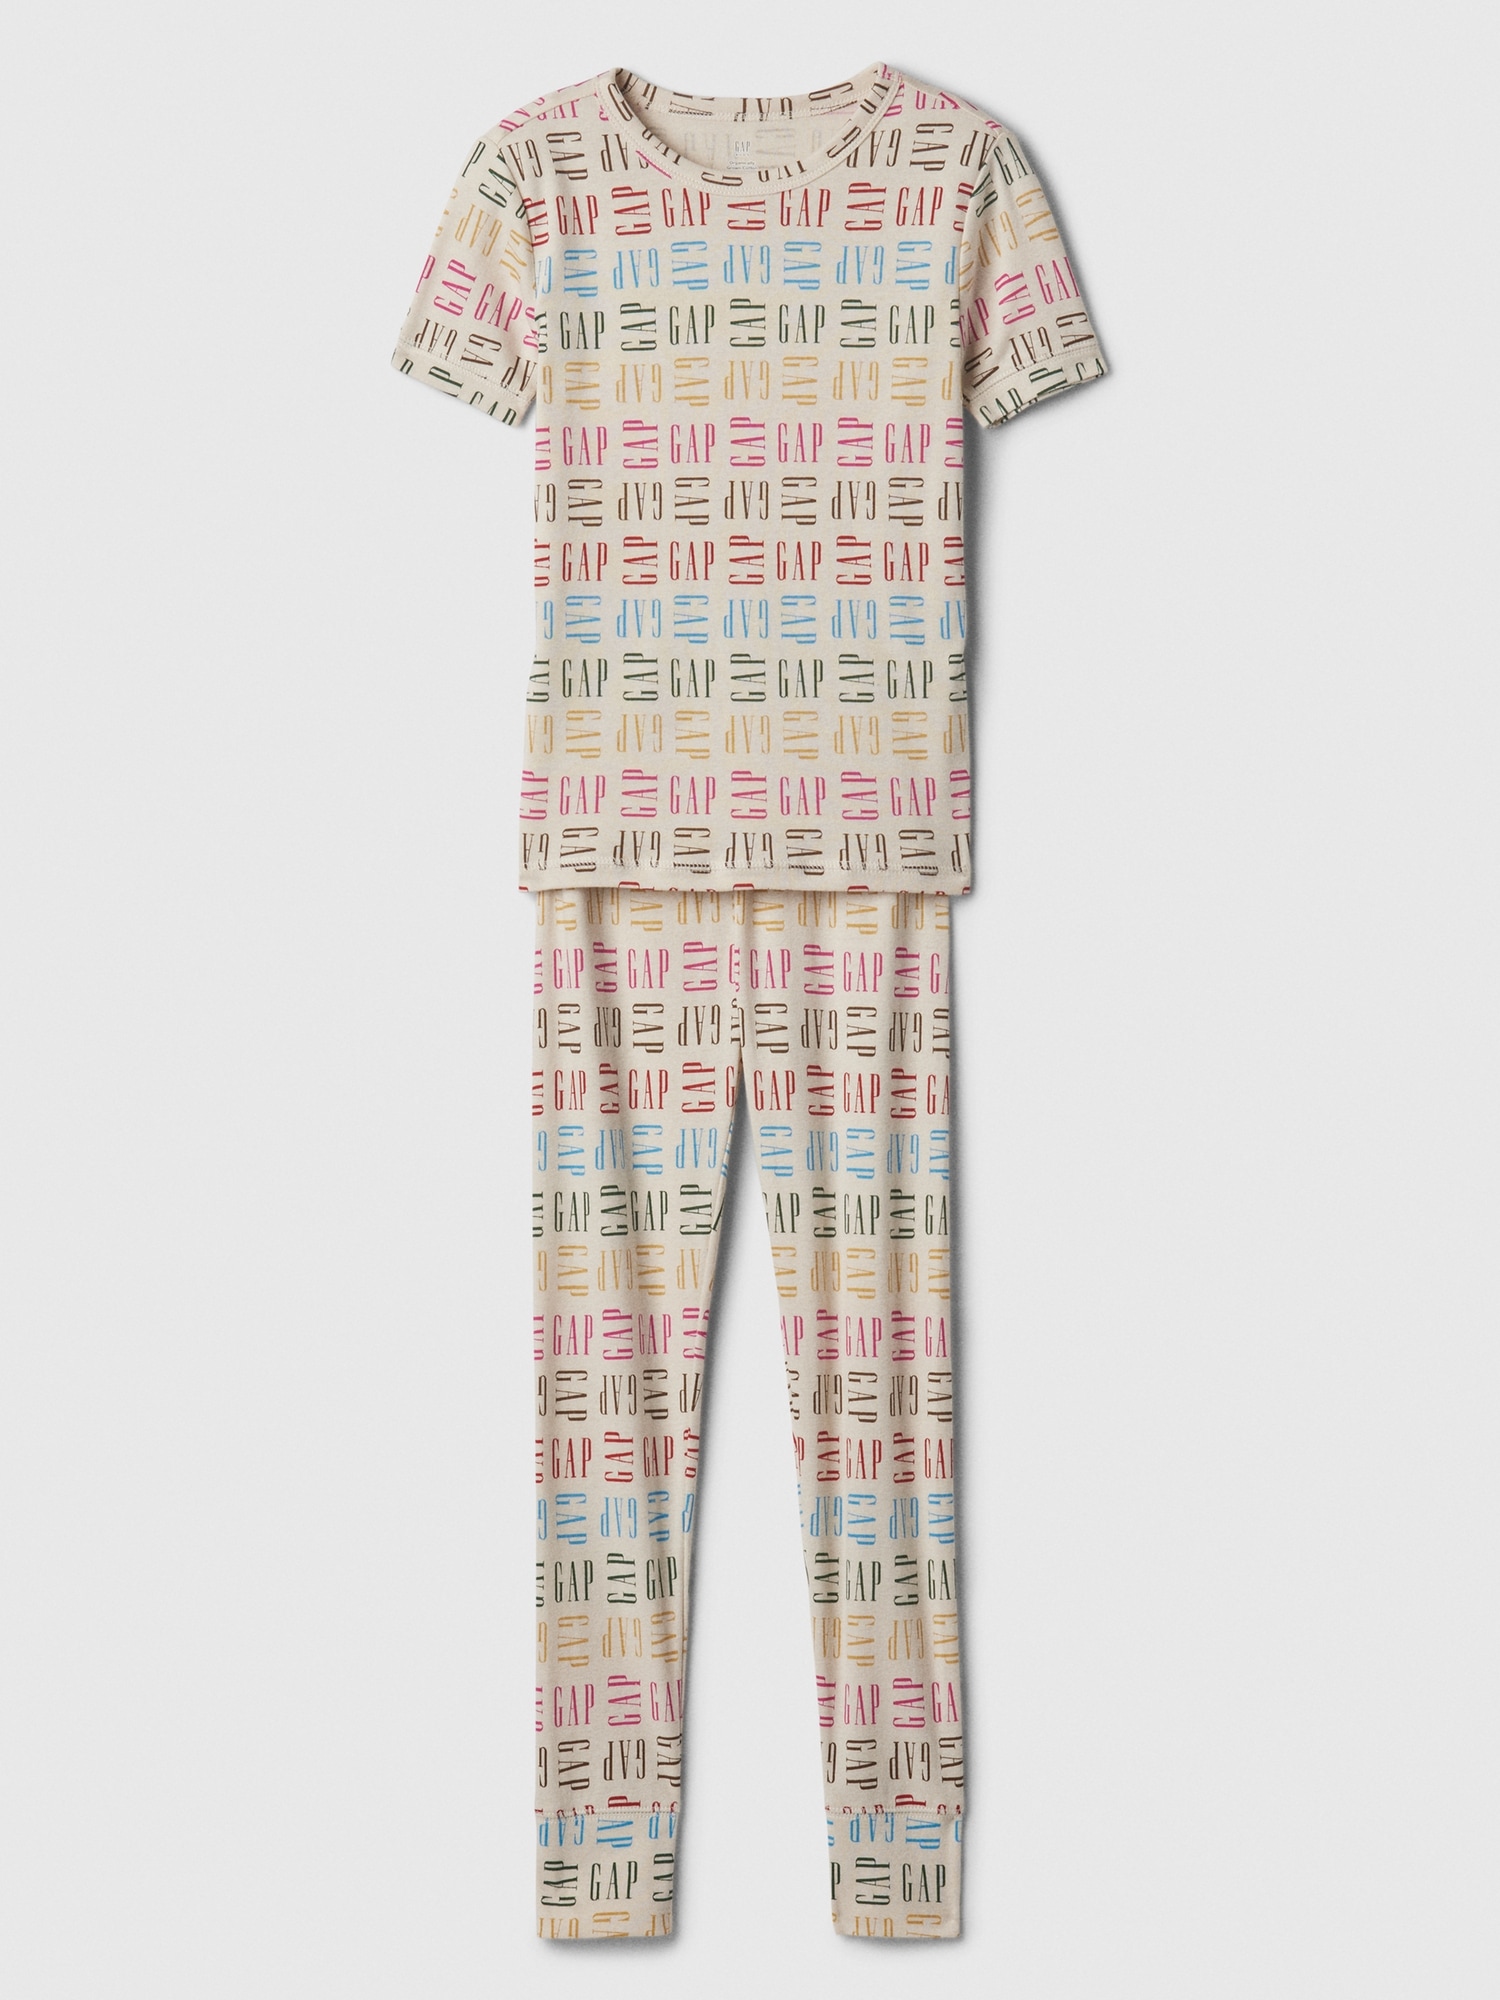 Grey 1-Piece Toy Story 100% Snug Fit Cotton Pyjamas